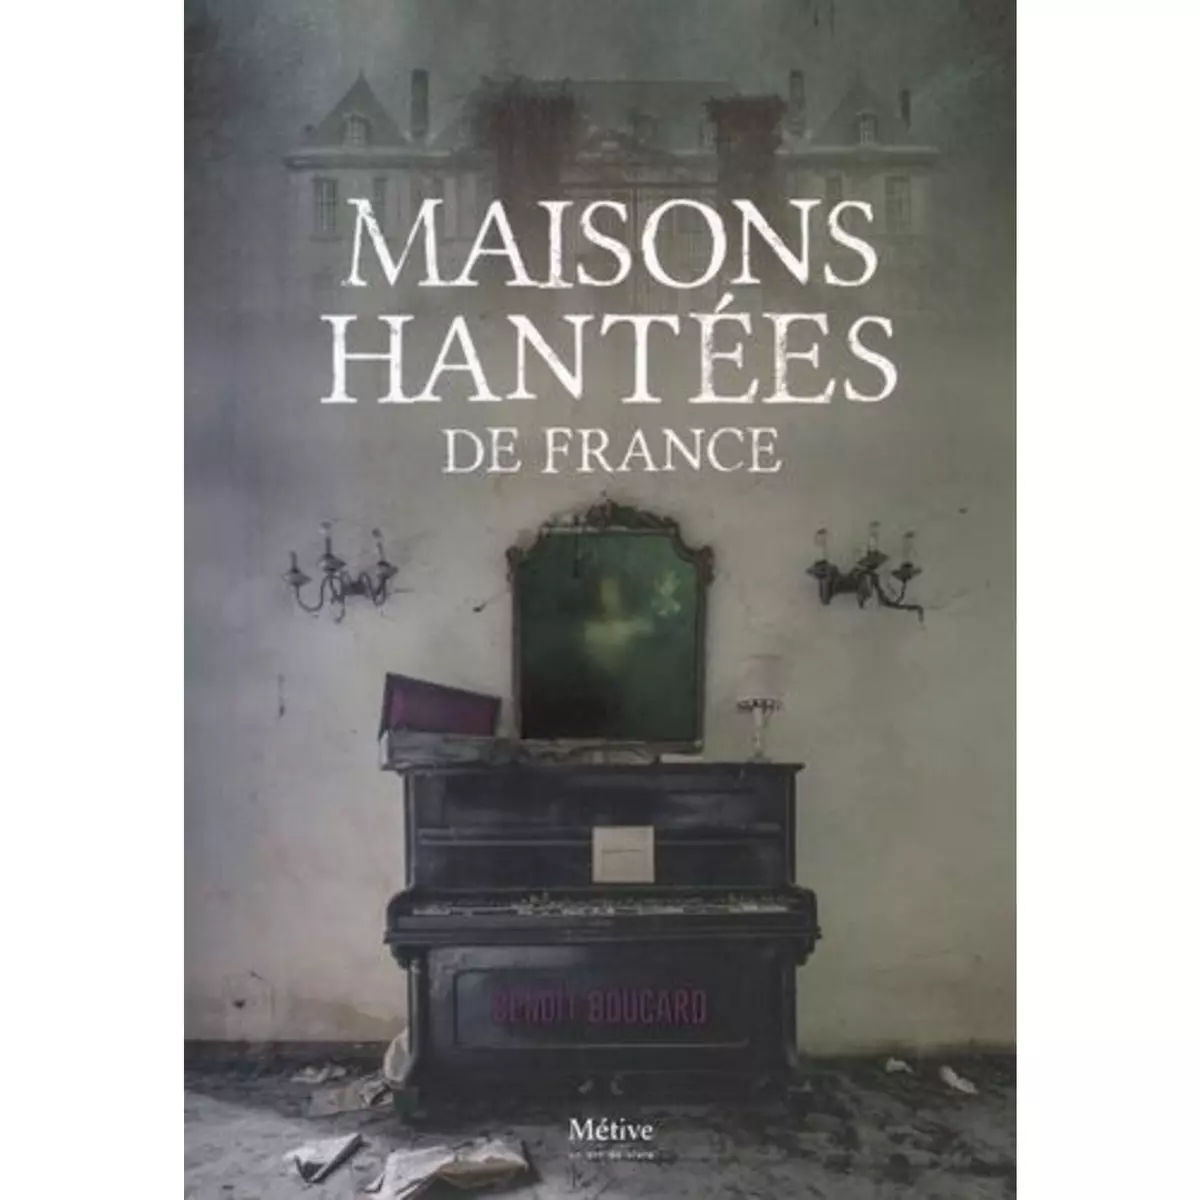  MAISONS HANTEES DE FRANCE  , Boucard Benoît